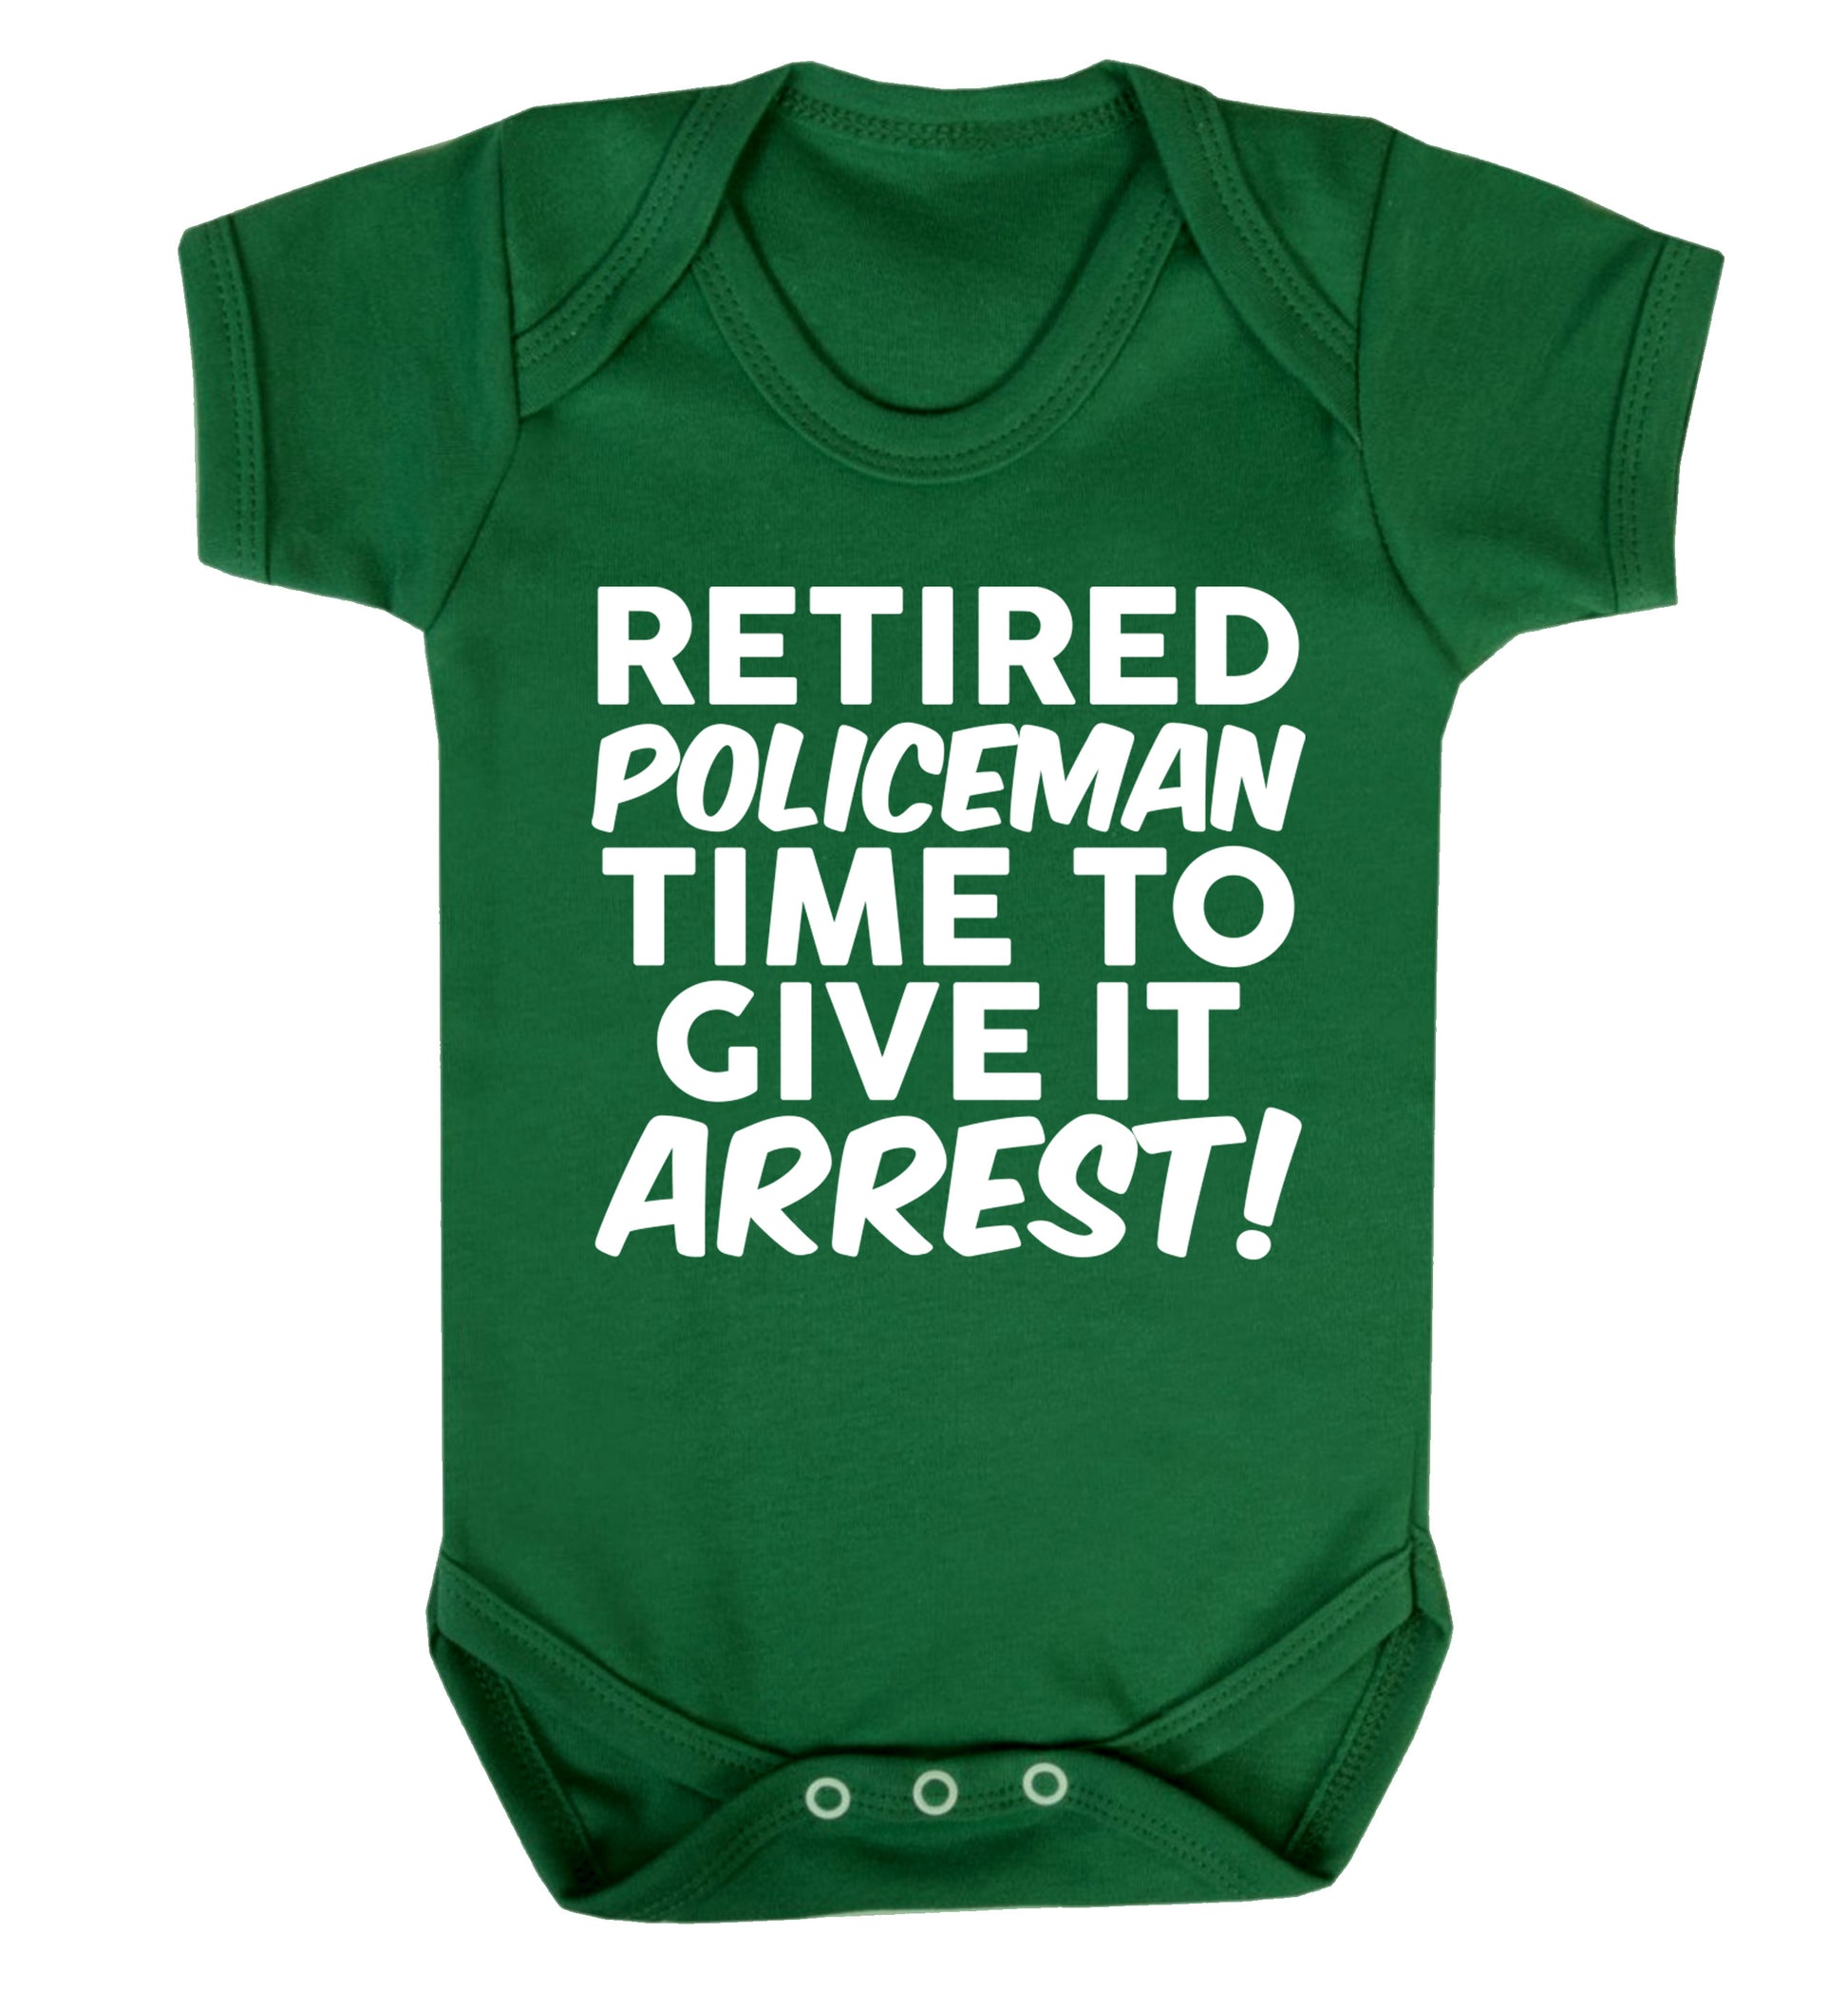 Retired policeman give it arresst! Baby Vest green 18-24 months